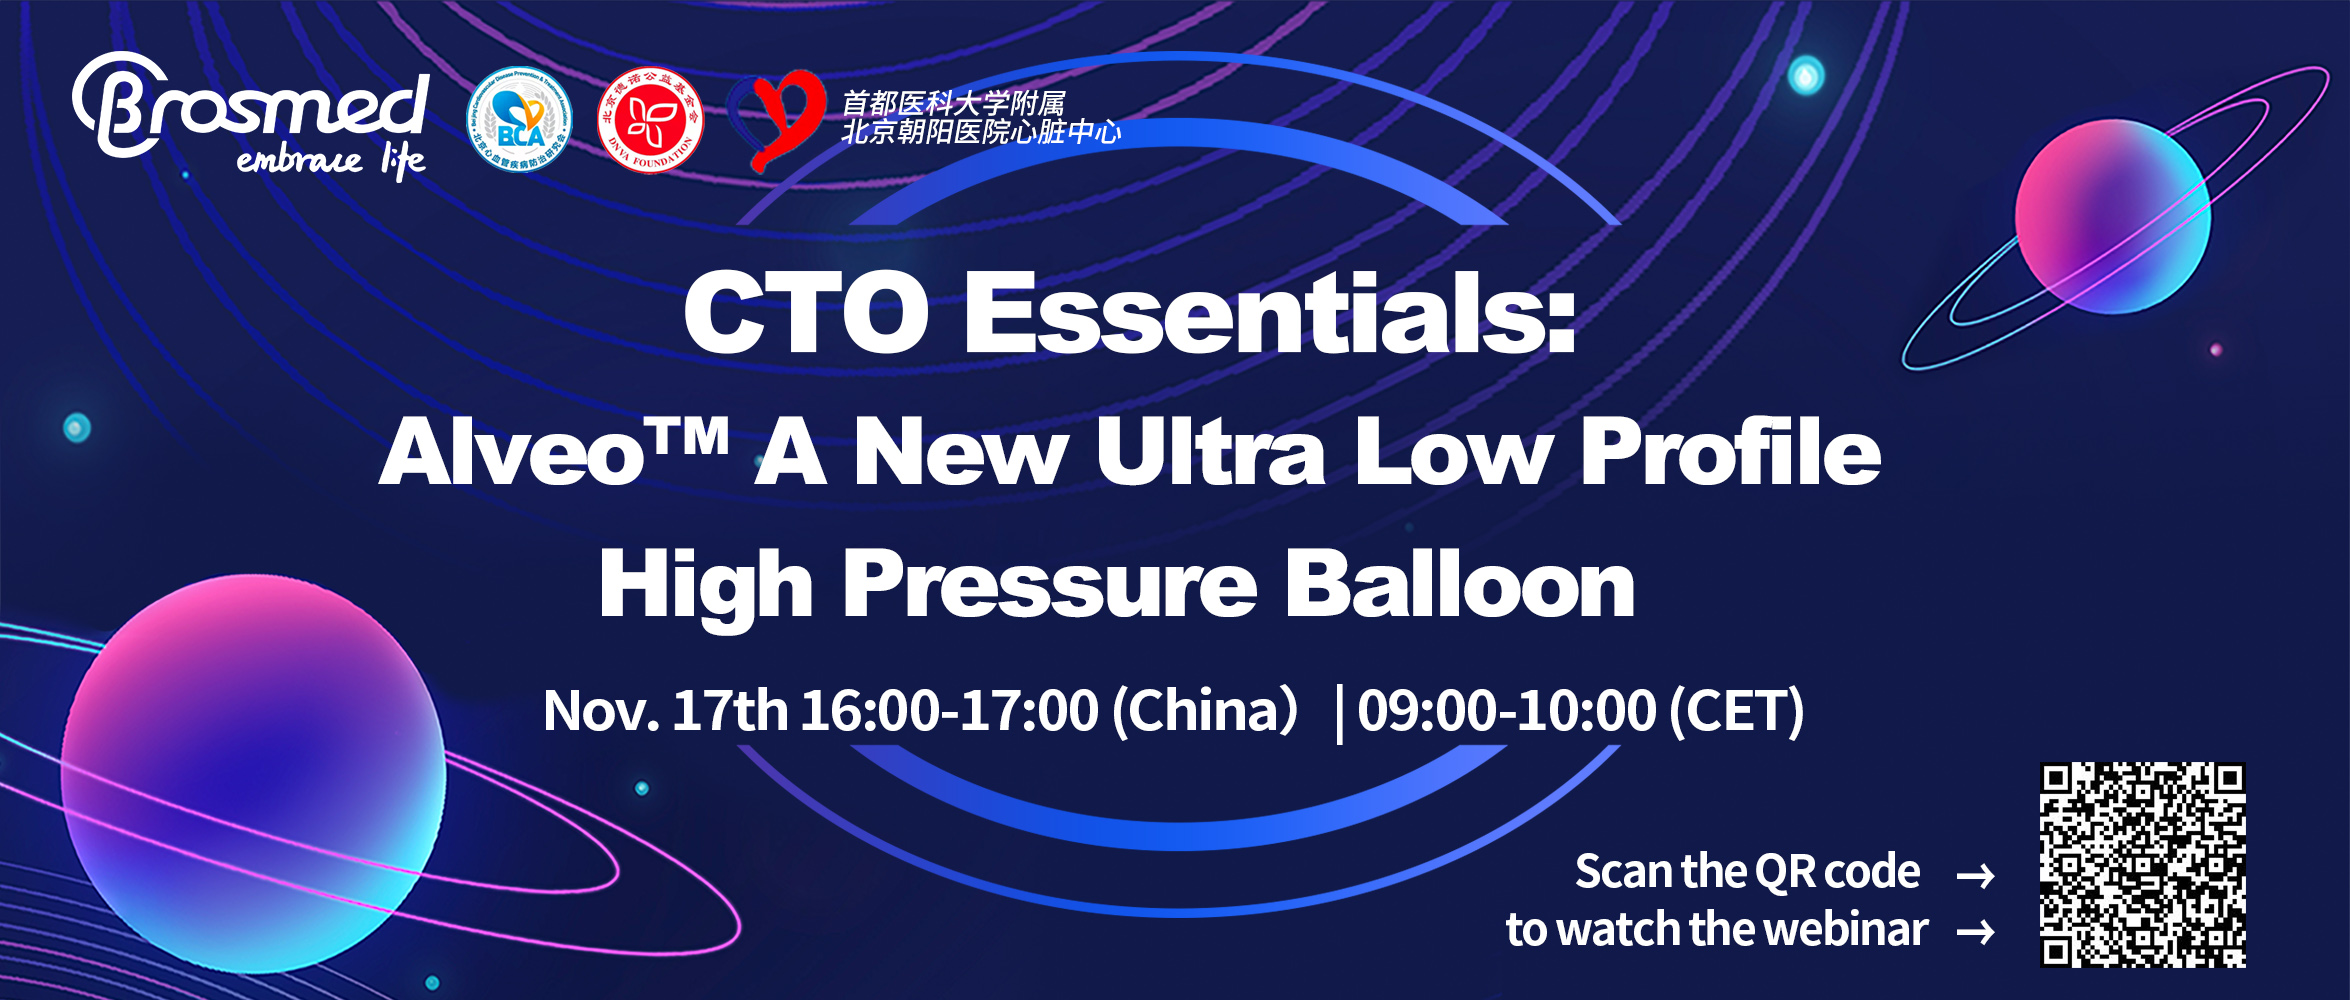 Webinar Announcement: CTO Essentials: Alveo, a new ultra low profile, high pressure balloon